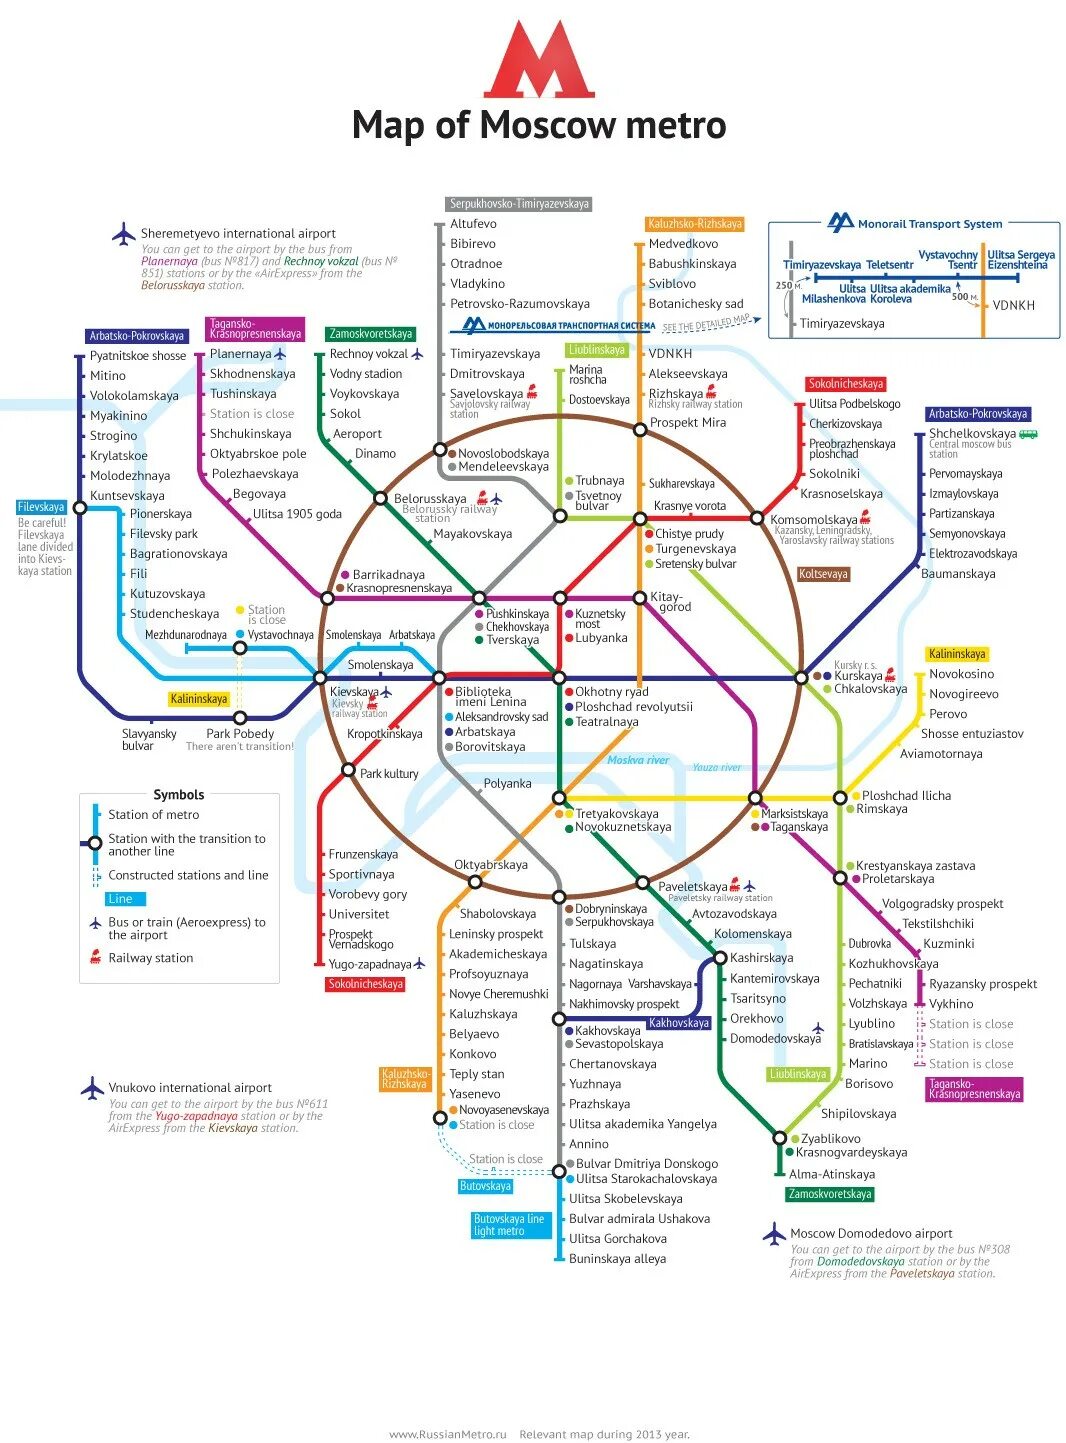 Схема метрополитена Москвы 2019